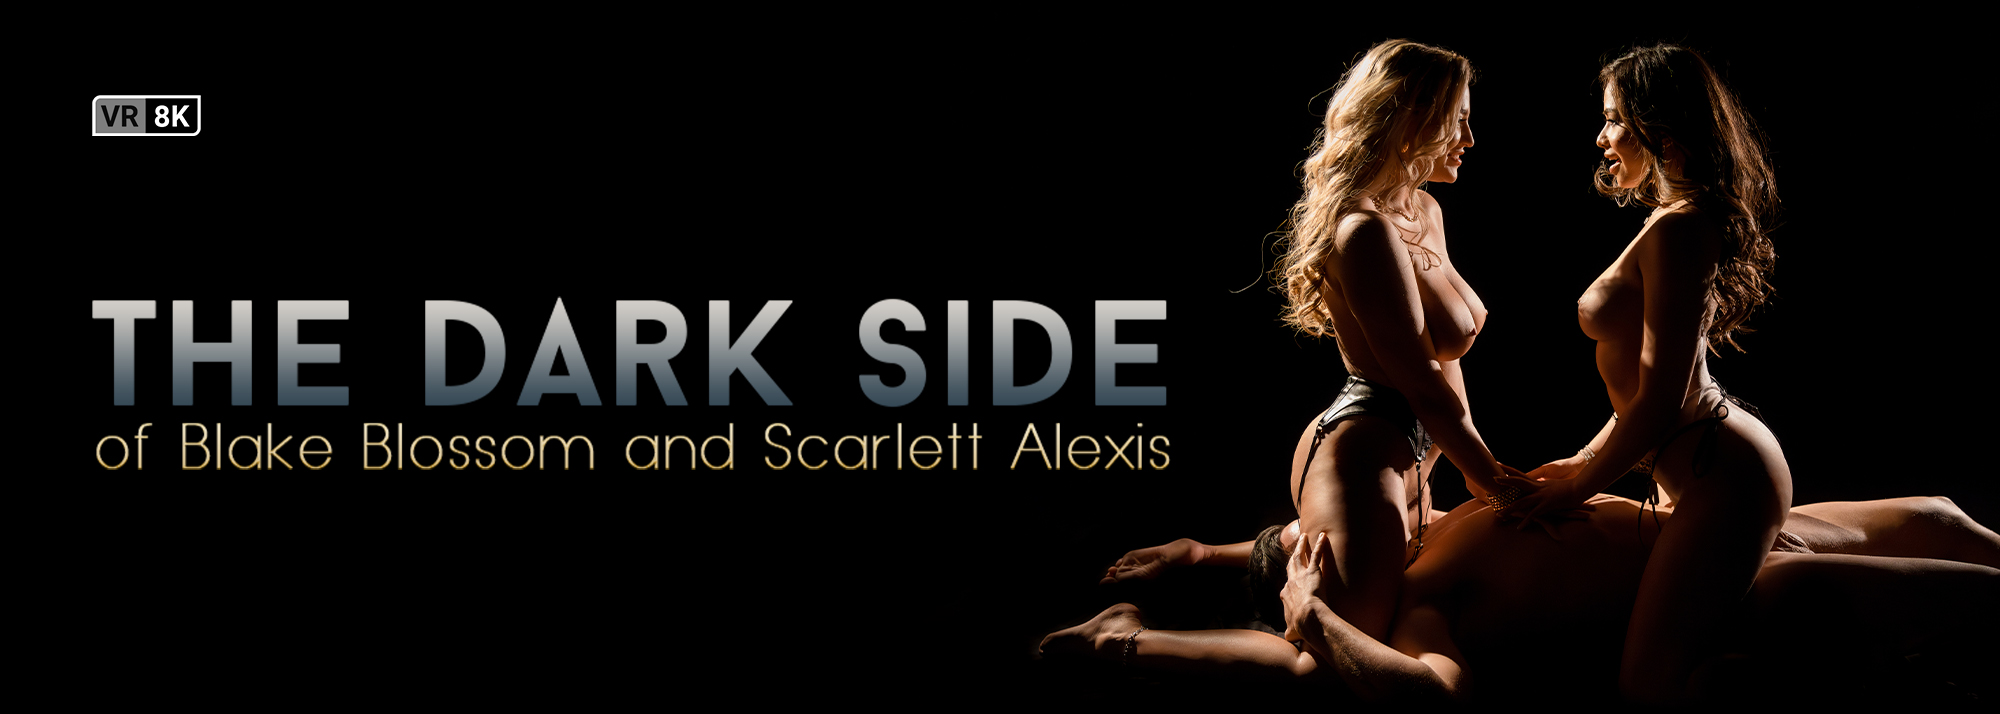 The Dark Side of Blake Blossom and Scarlett Alexis - VR Porn Video, Starring: Blake Blossom, Scarlett Alexis